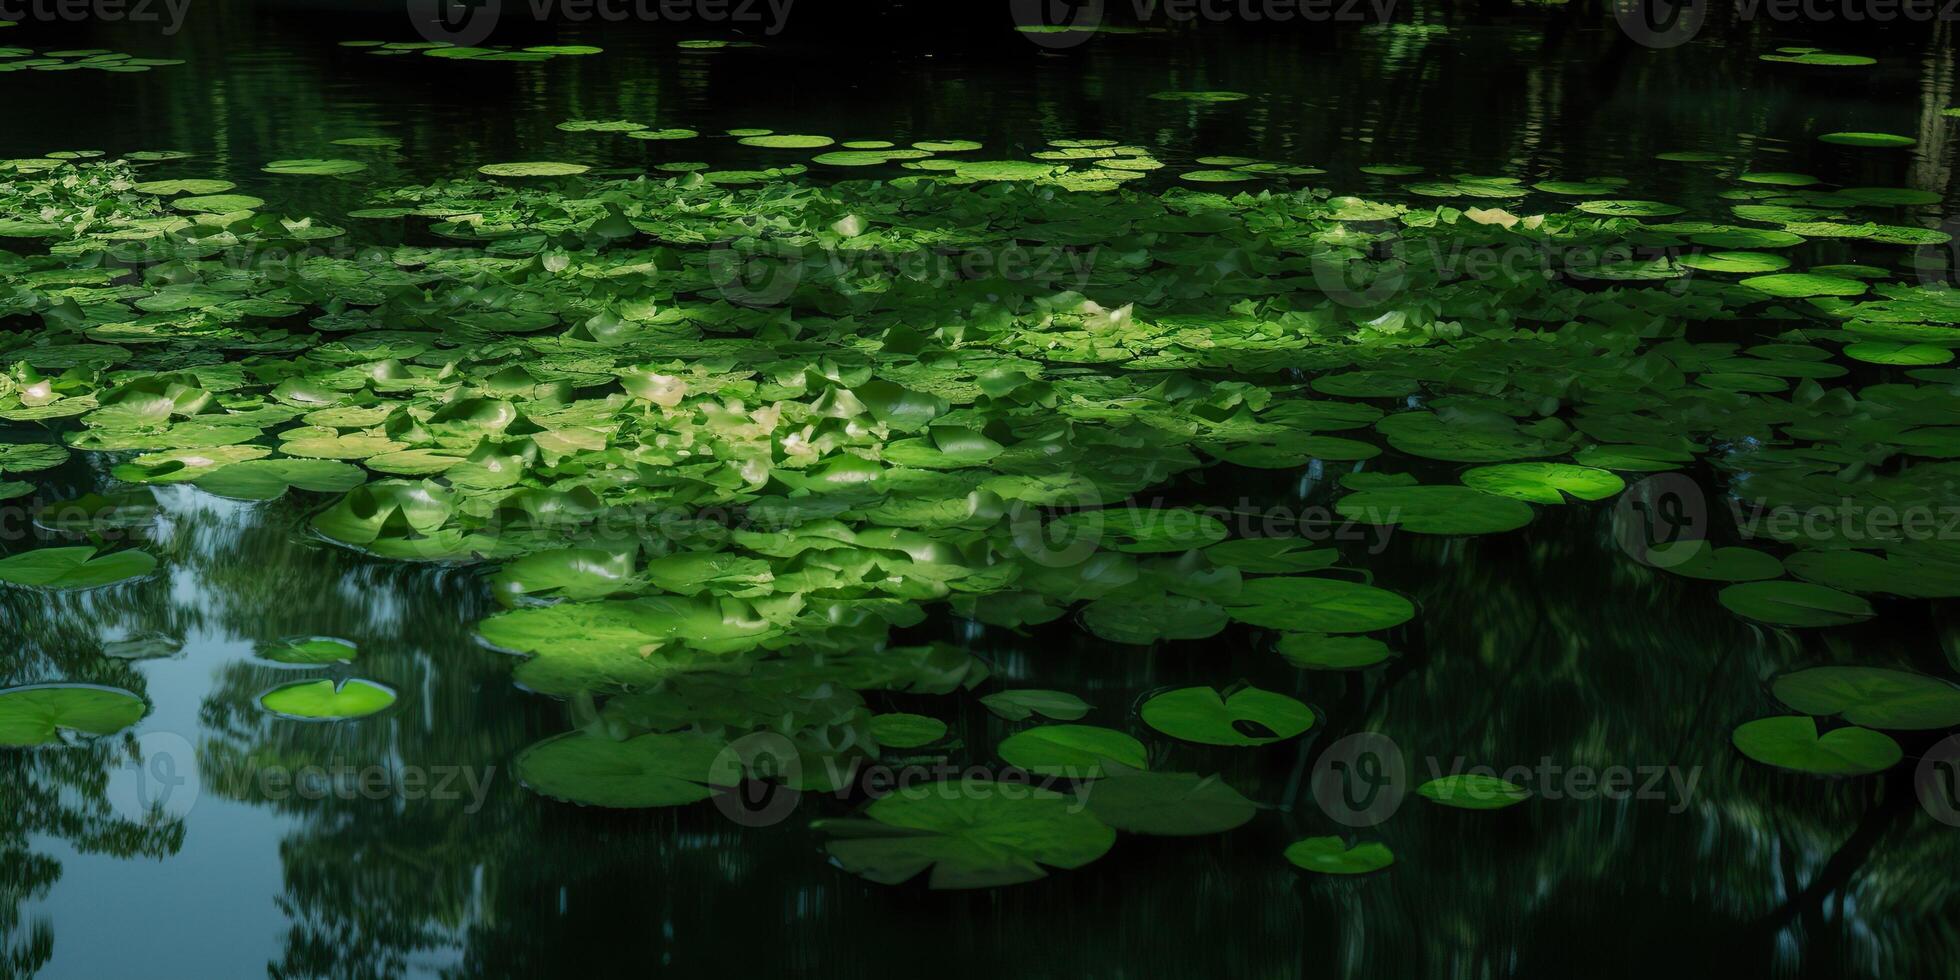 grön löv på damm flod sjö landscaoe bakgrund se foto